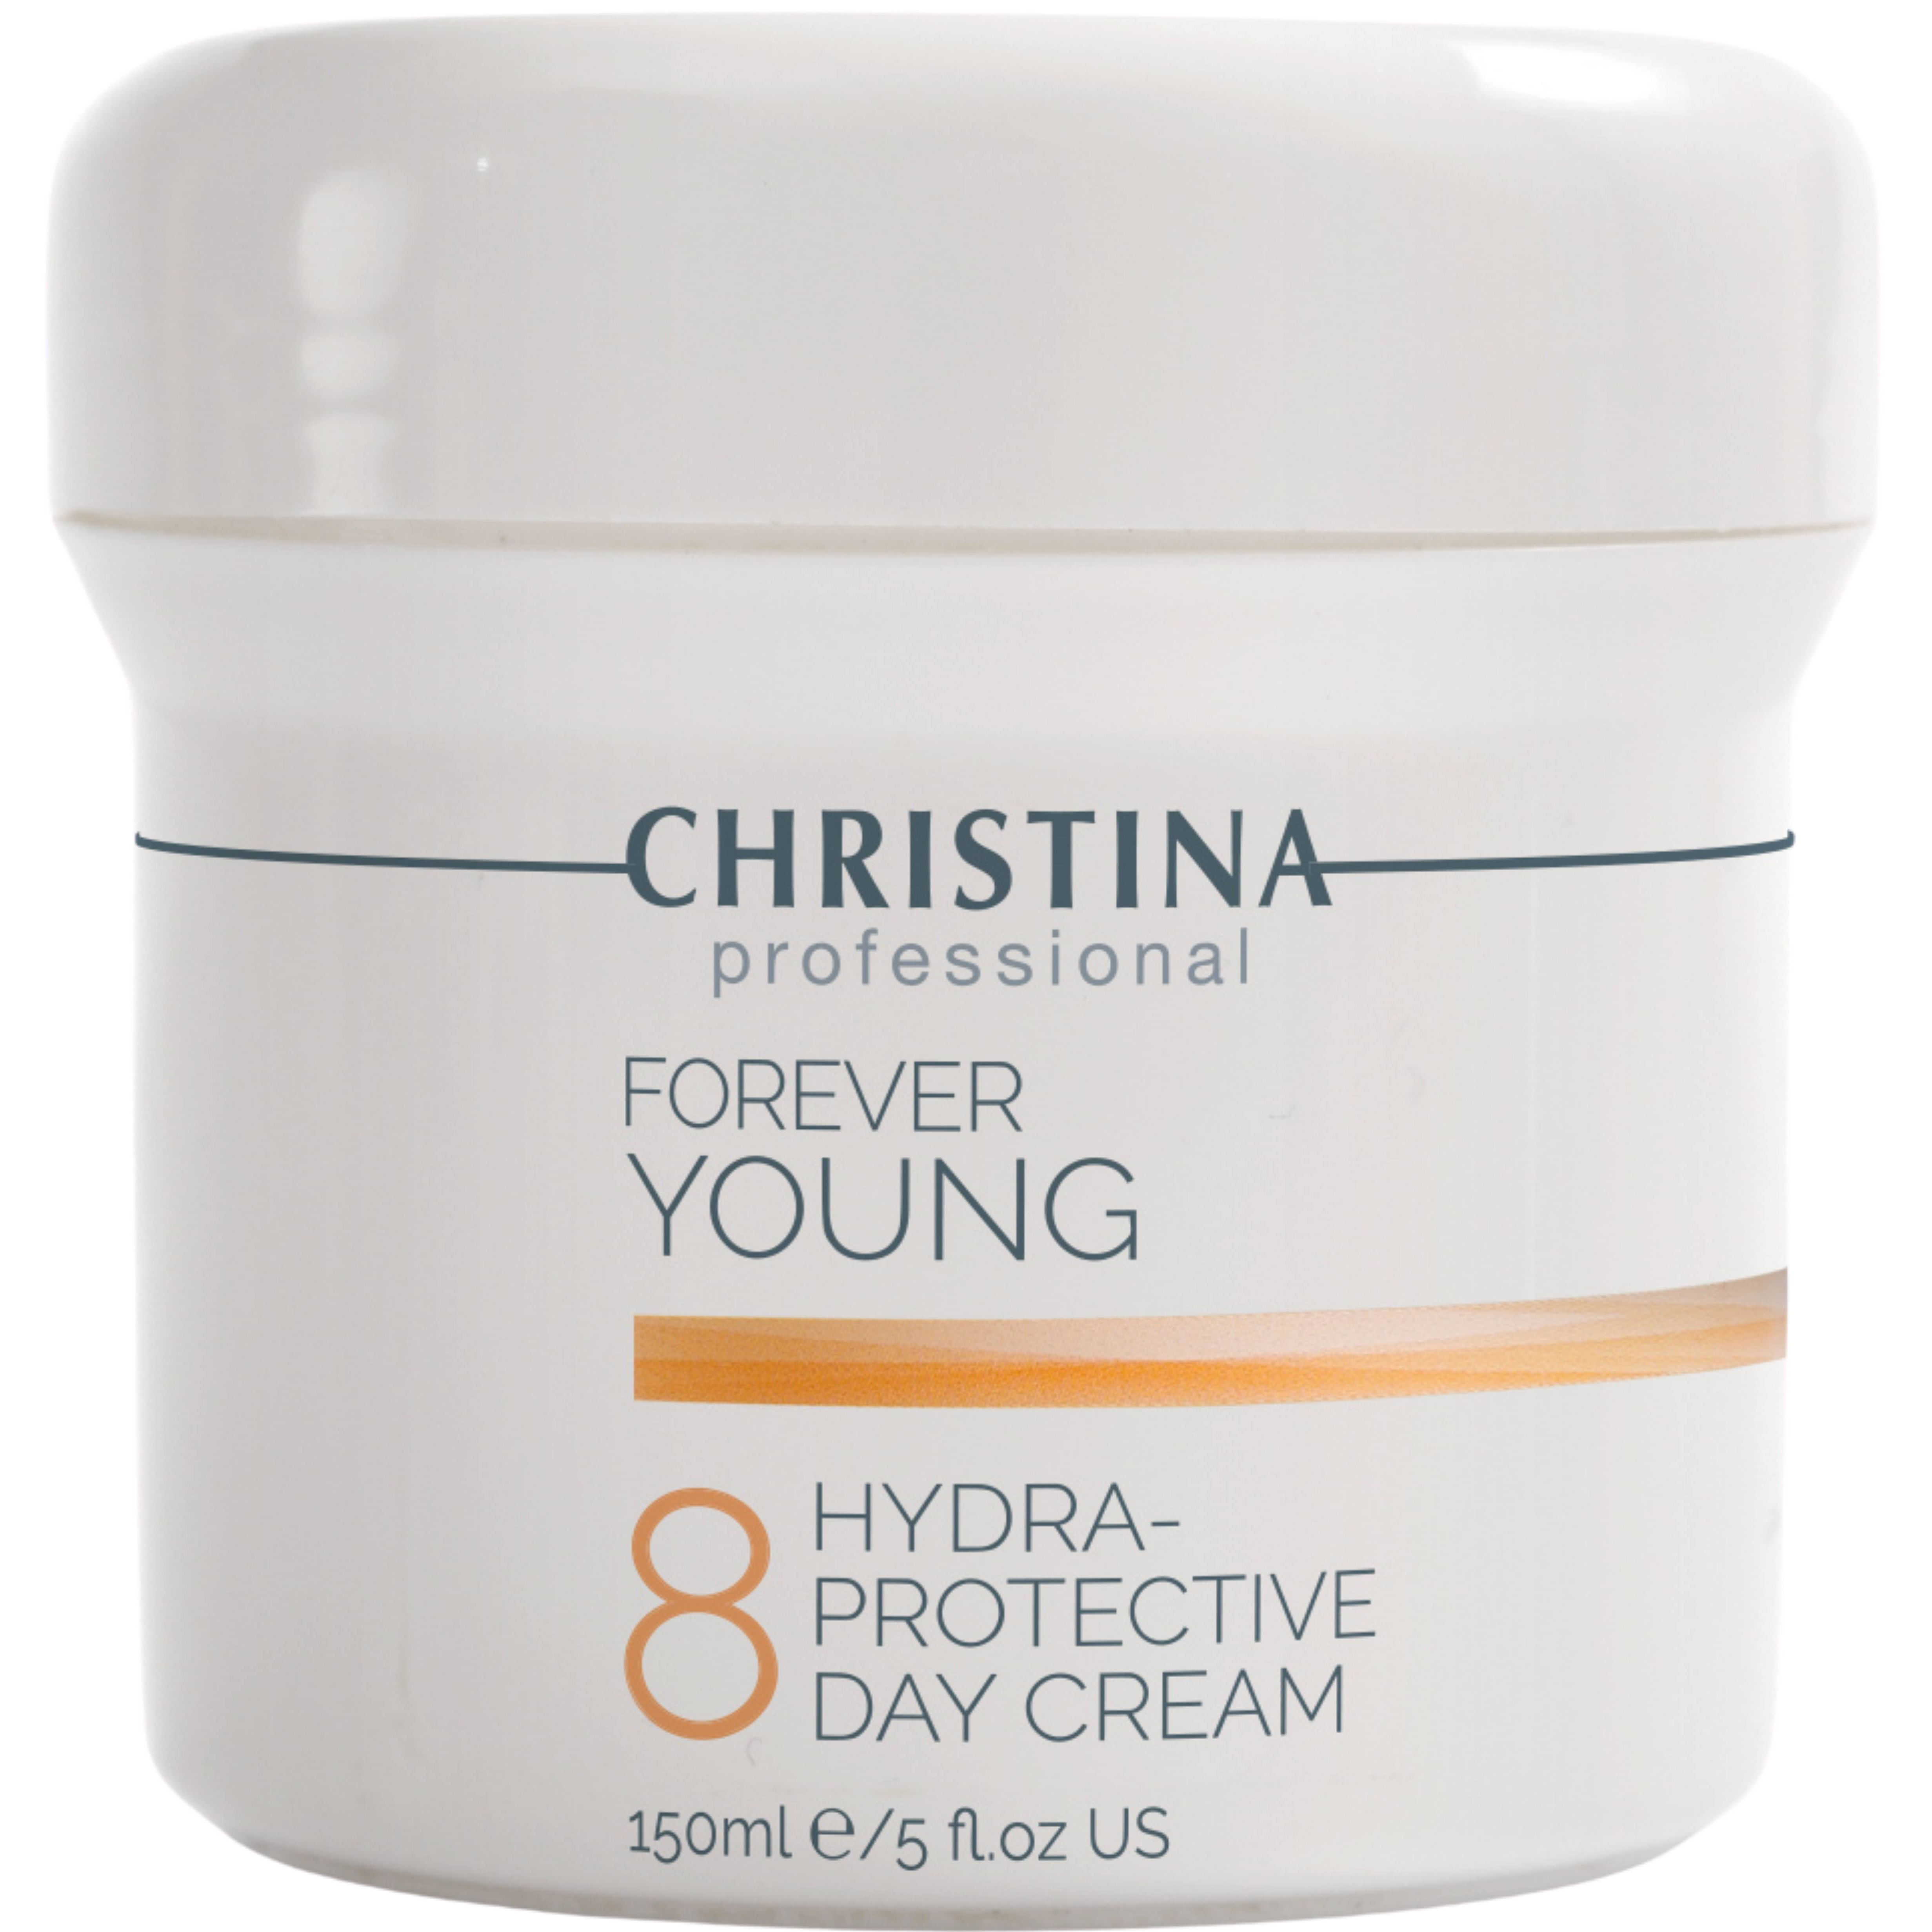 Денний гідрозахисний крем Christina Forever Young 8 Hydra Protective Day Cream SPF 25 150 мл - фото 1